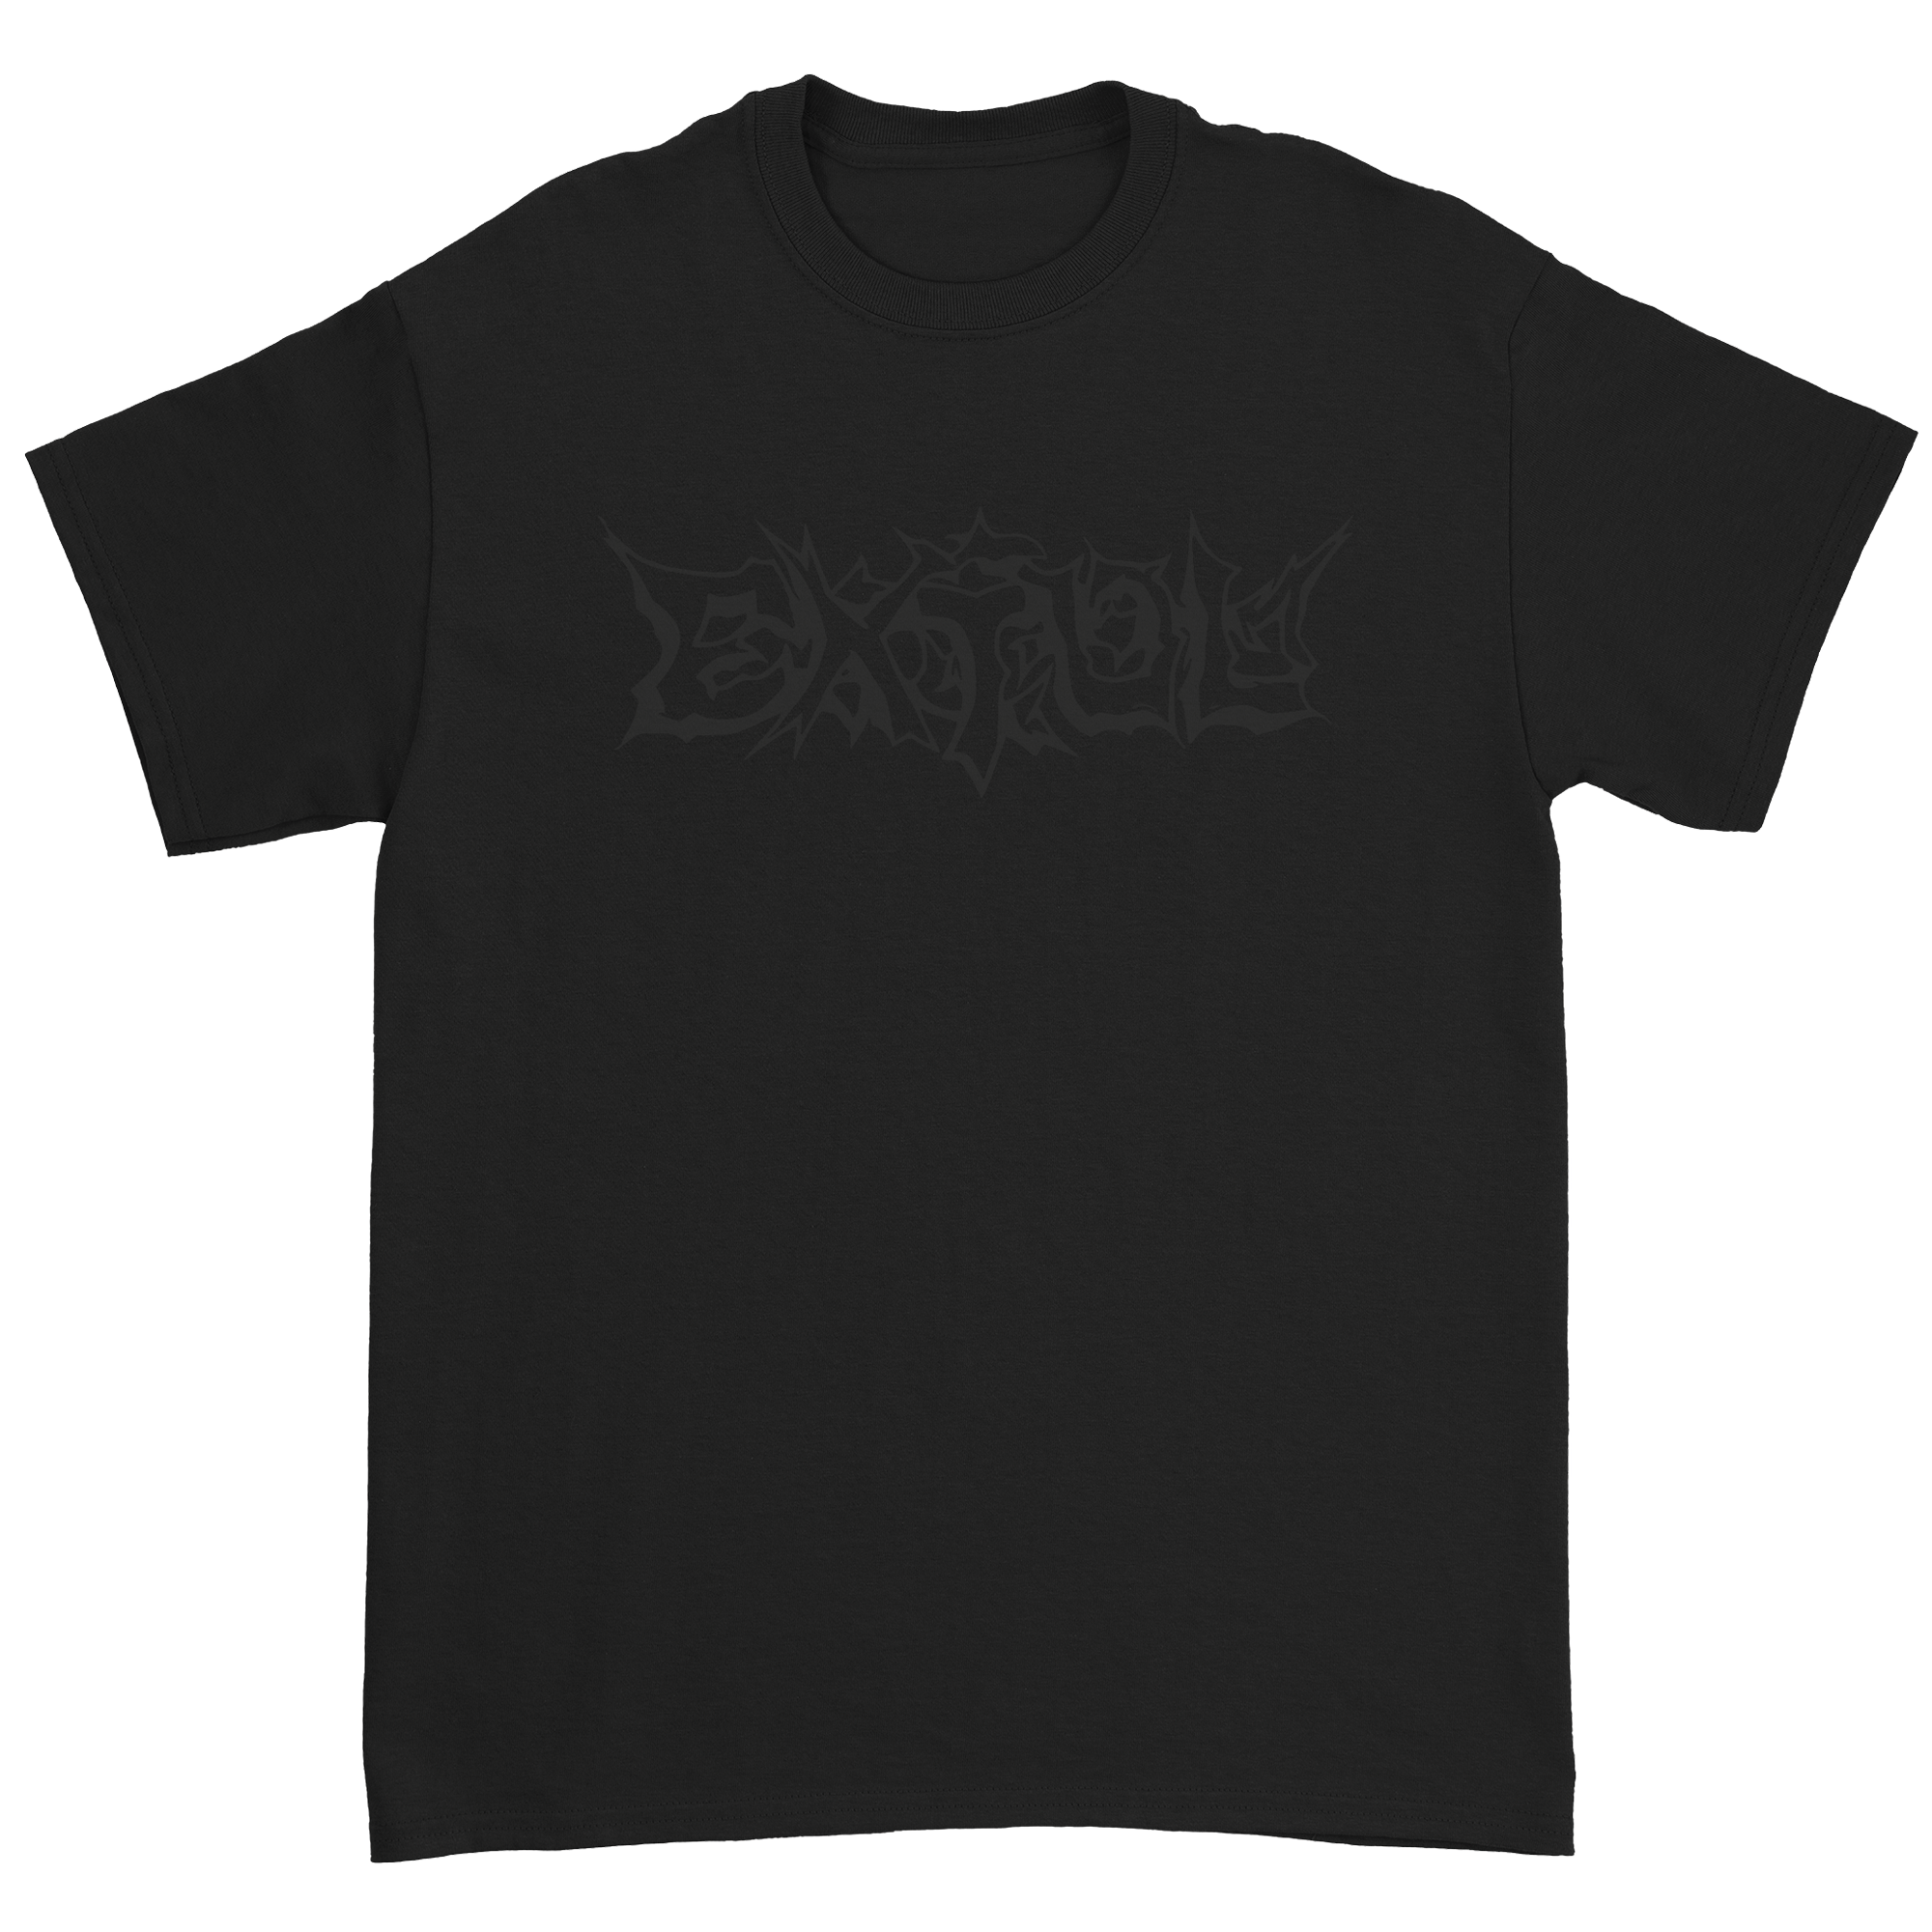 EXTOL - Black on Black Original Logo T-Shirt